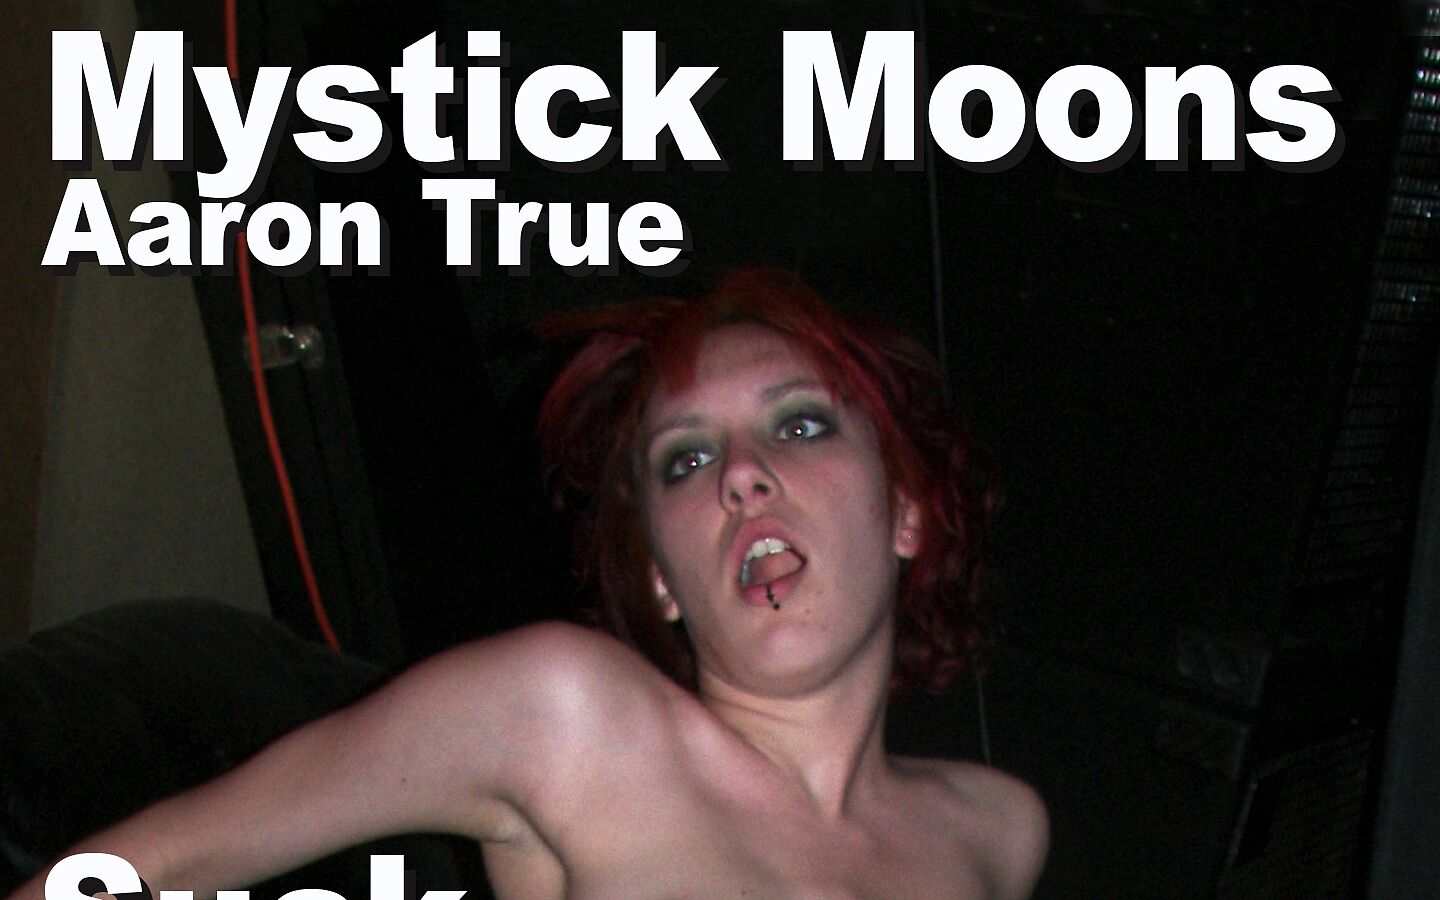 Mystick moons